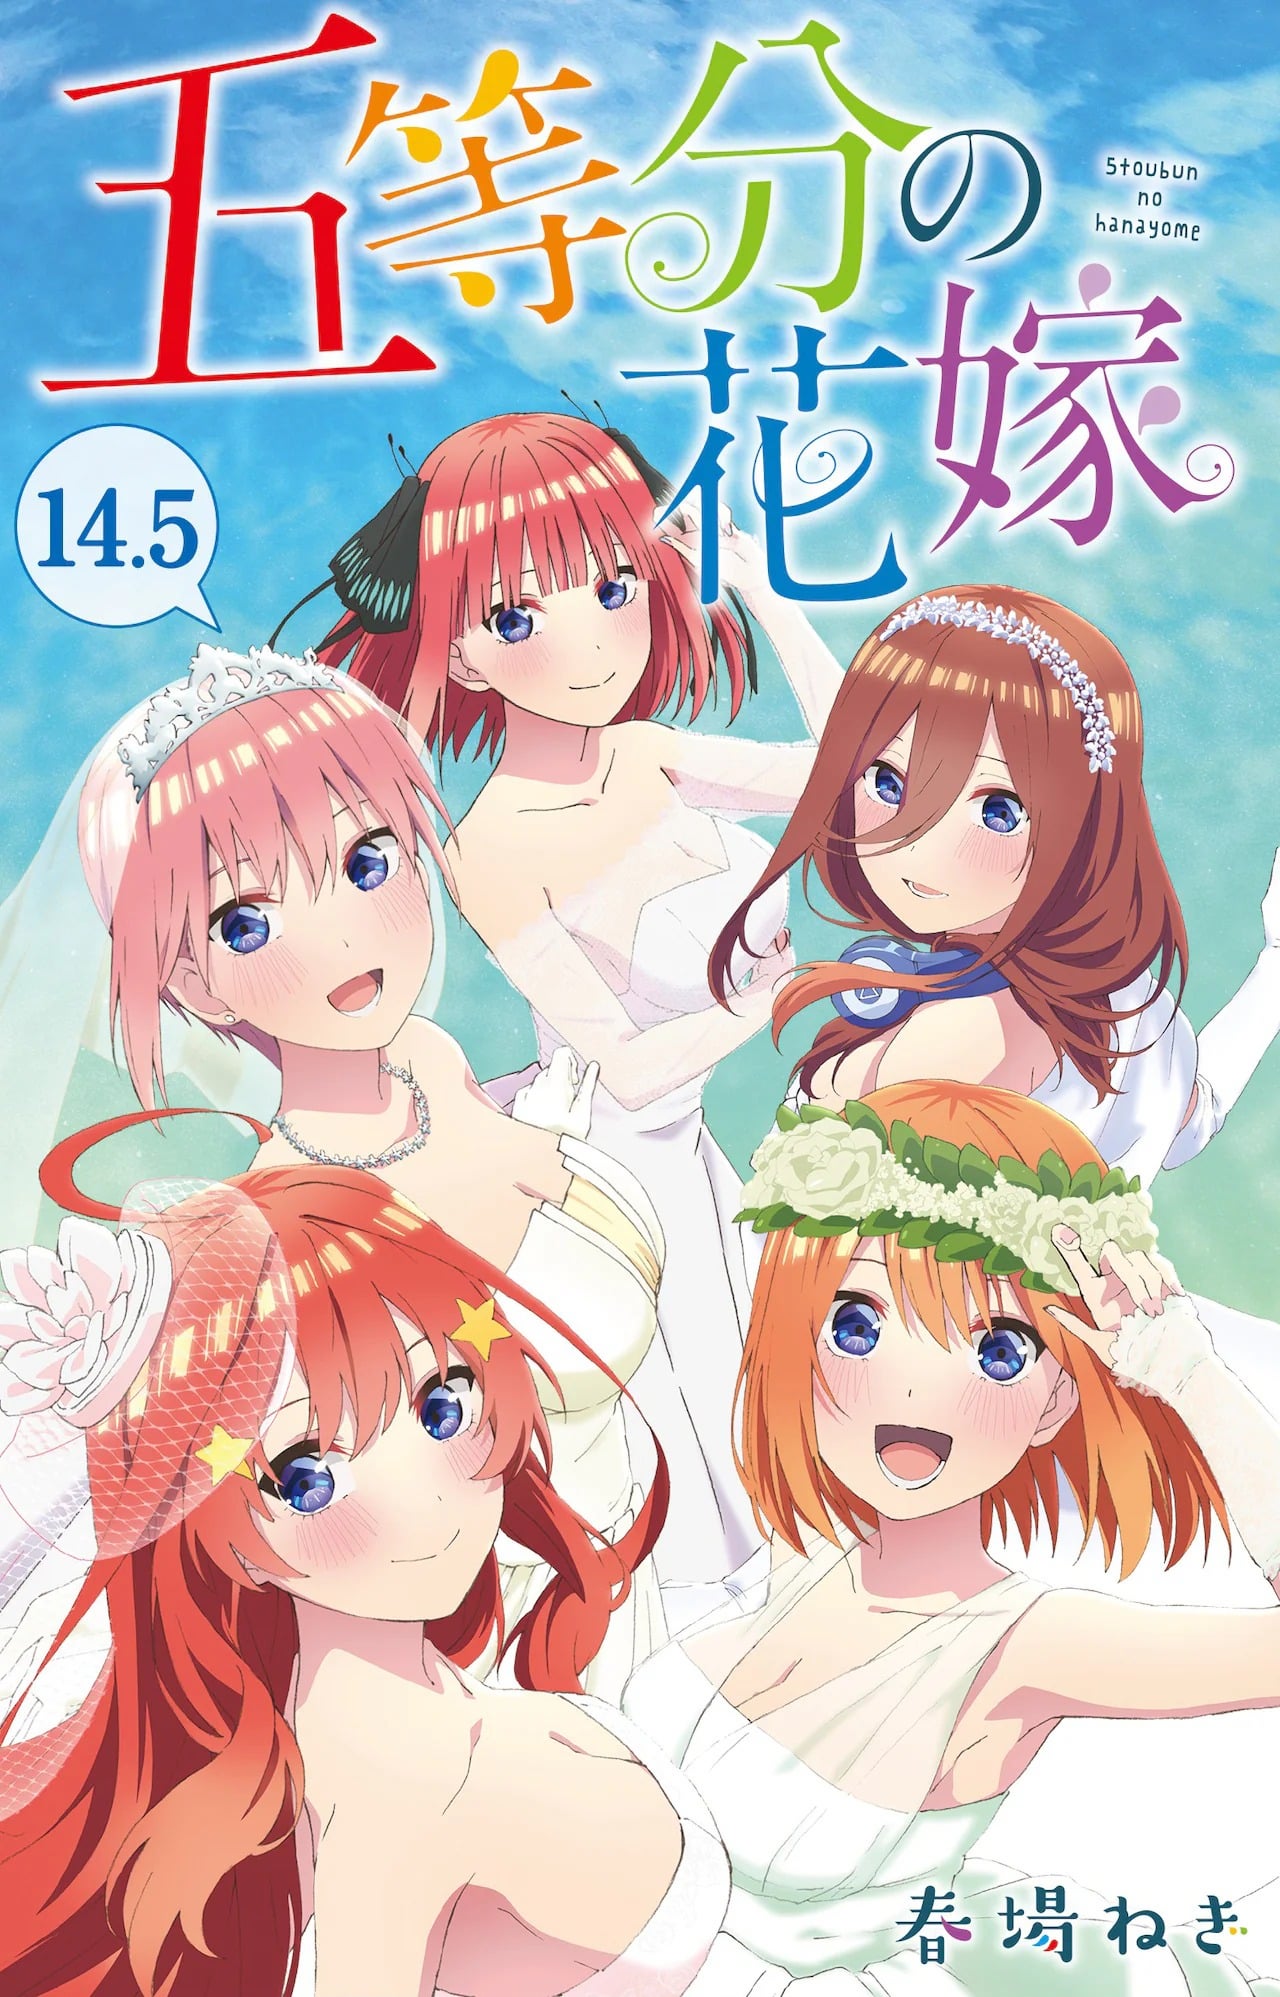 Go-Toubun no Hanayome - Página 4 - Mangás, Light novels & Visual novels